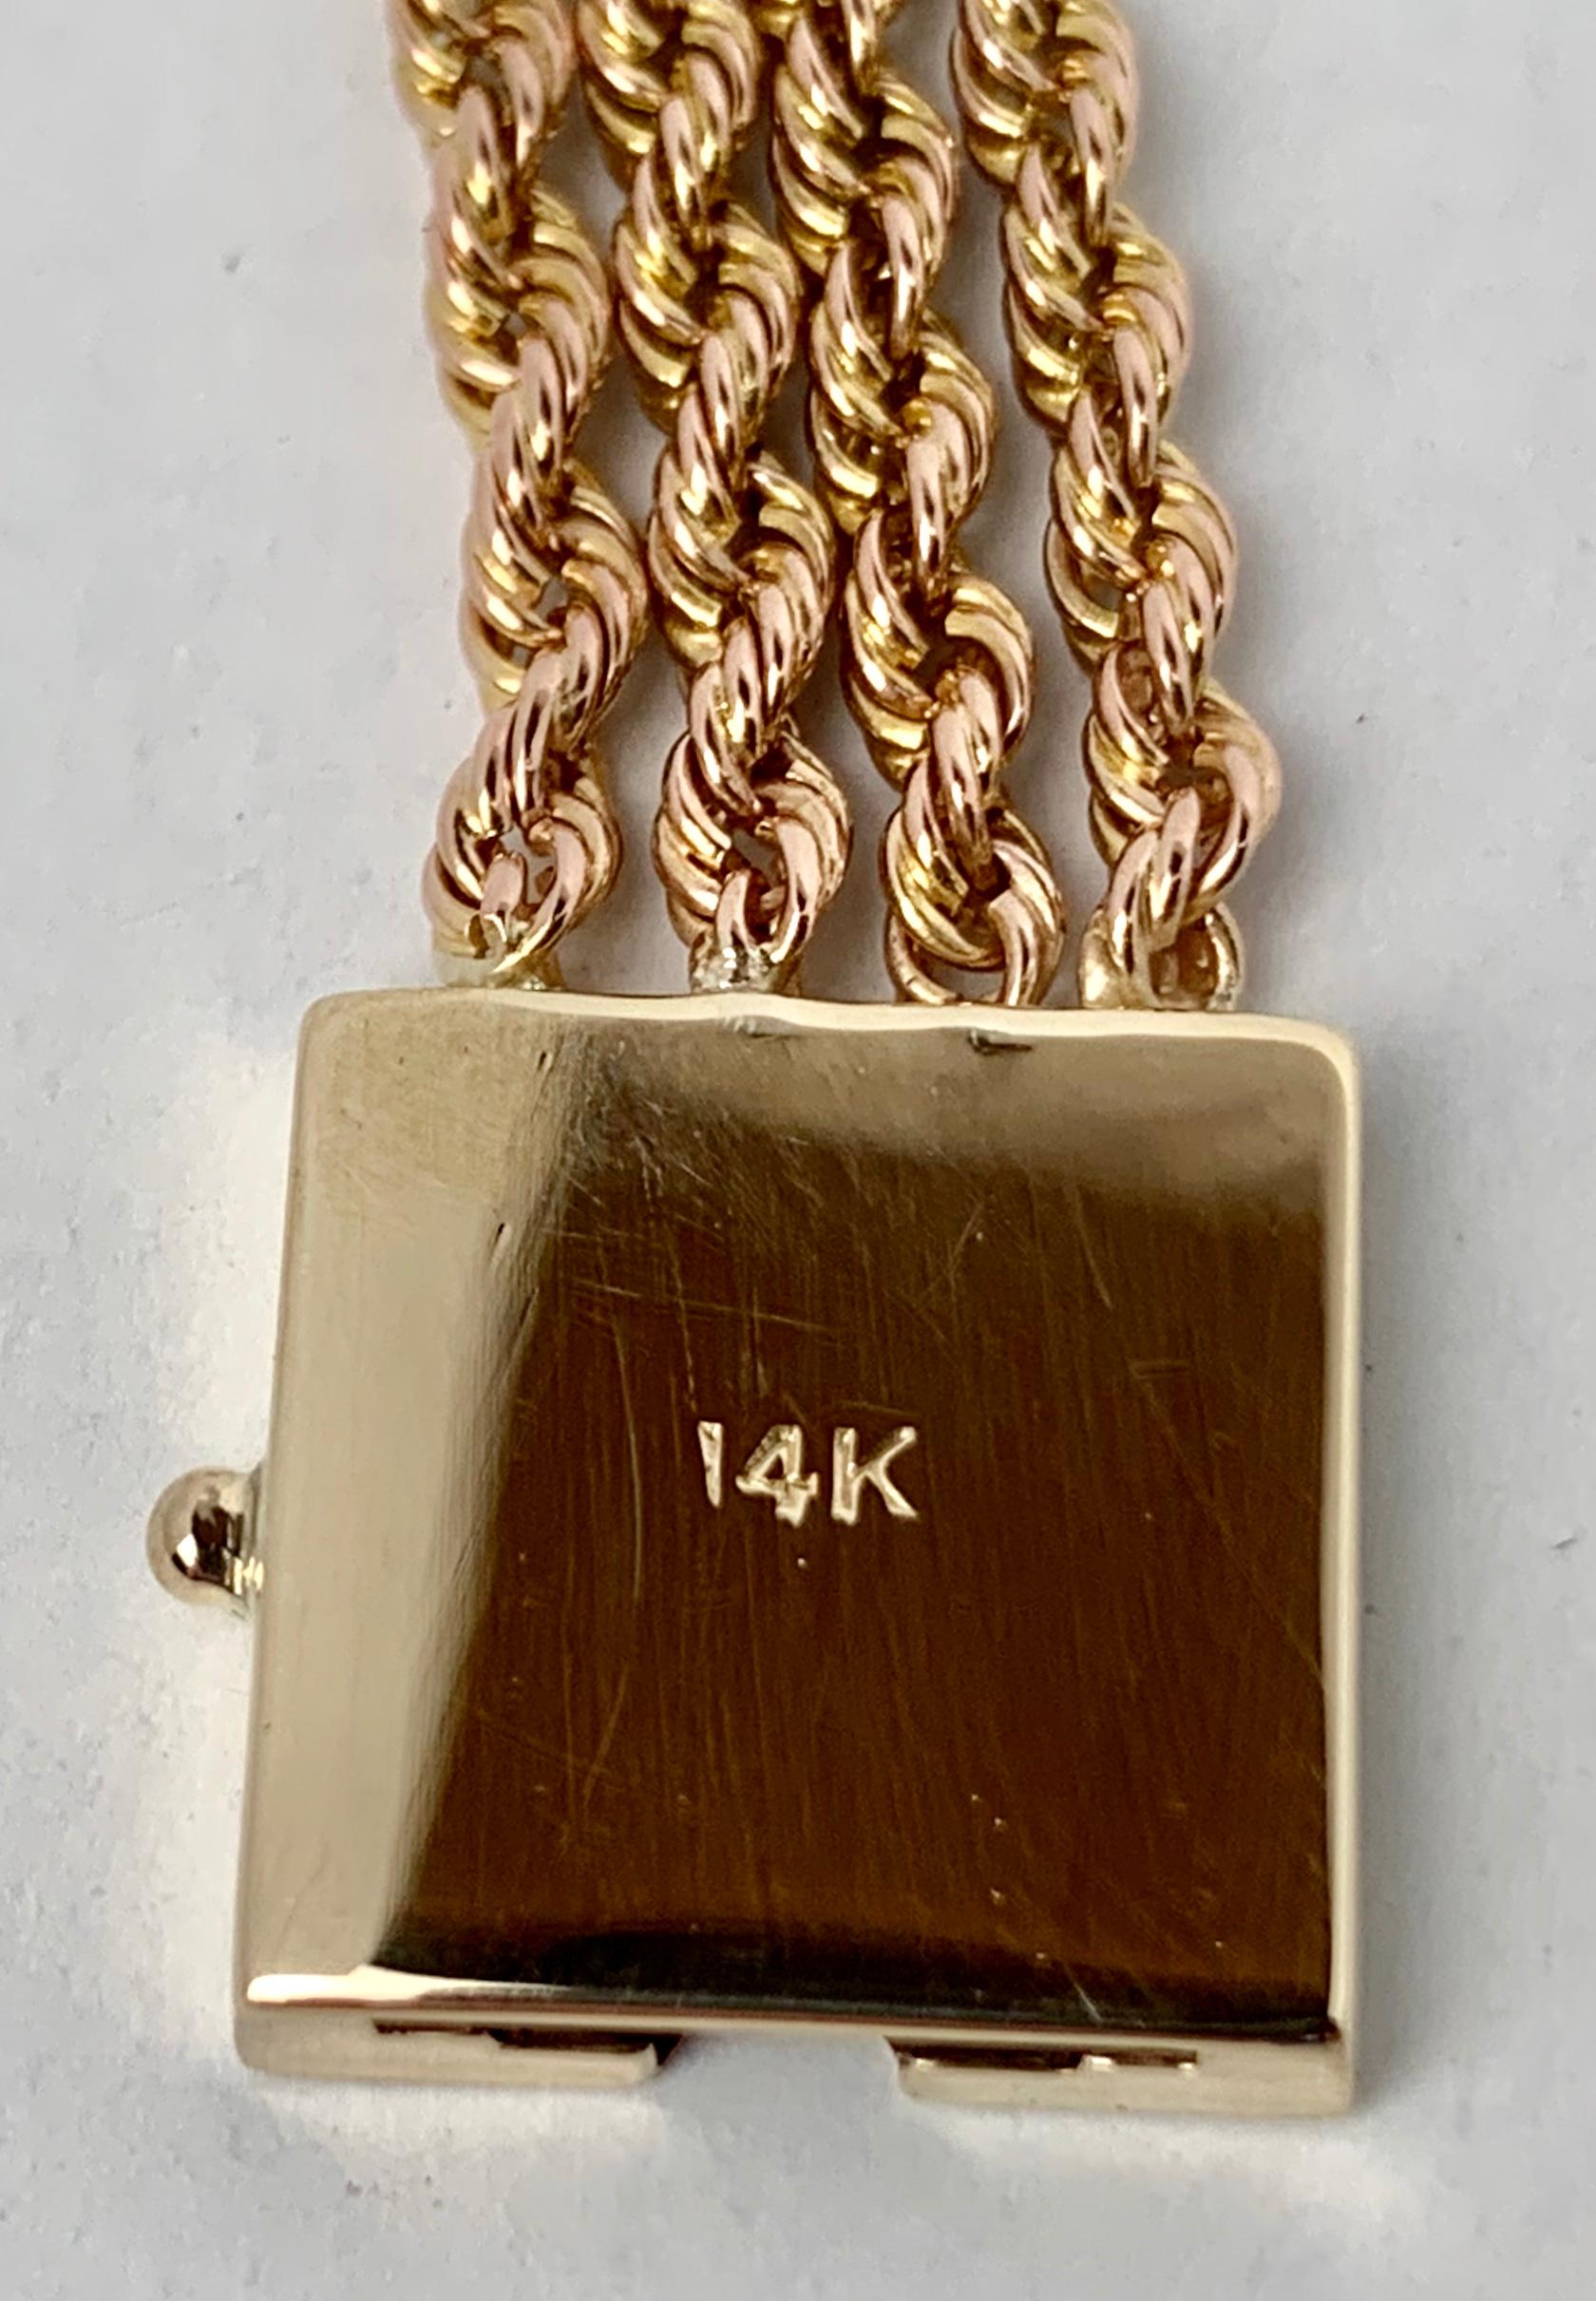 14 karat gold rope bracelet